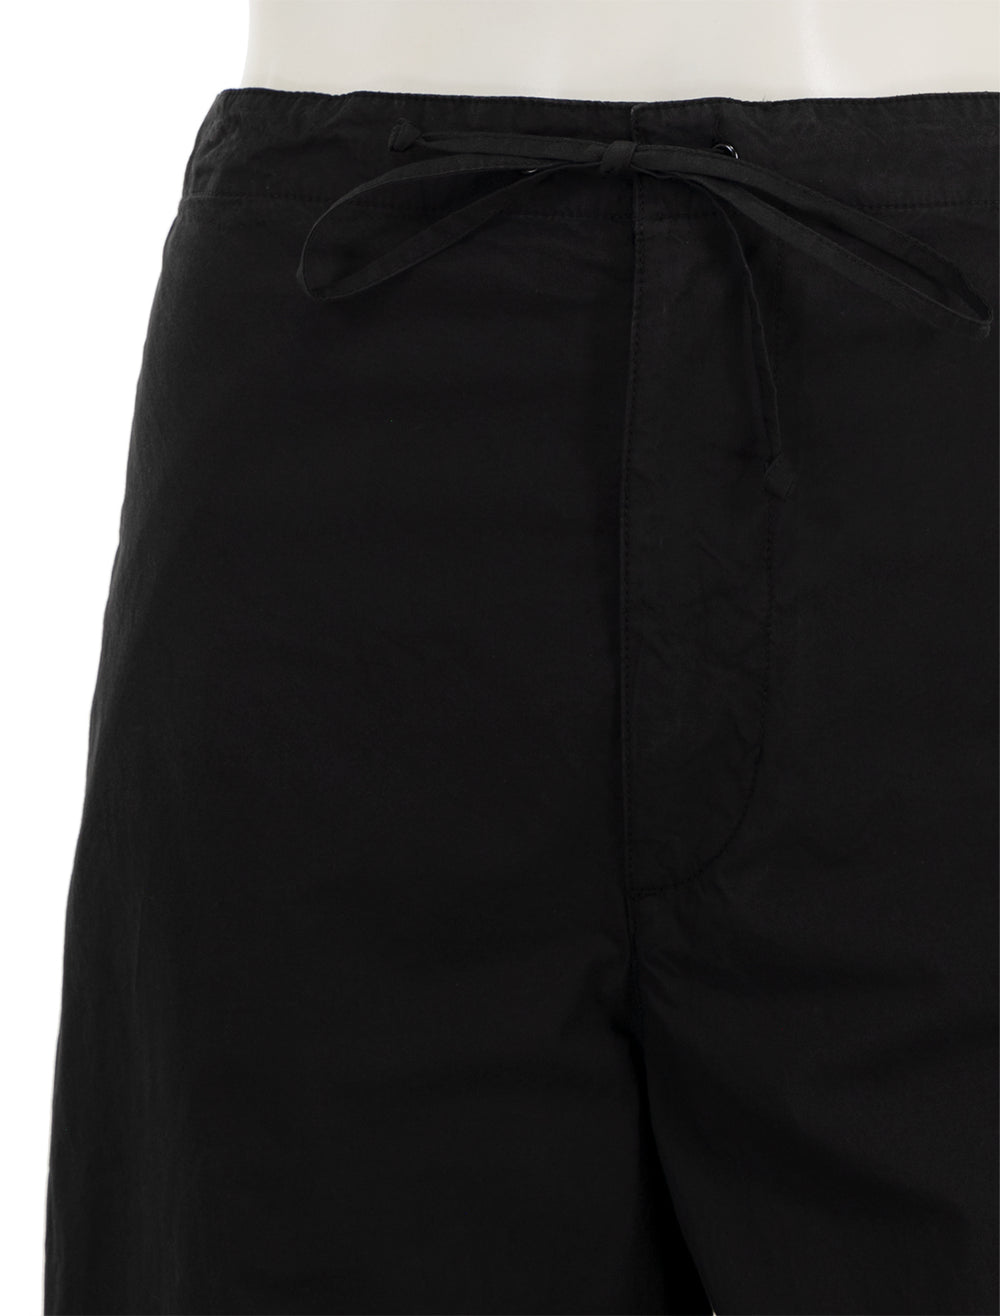 Close-up view of Nili Lotan's kai pant in black.